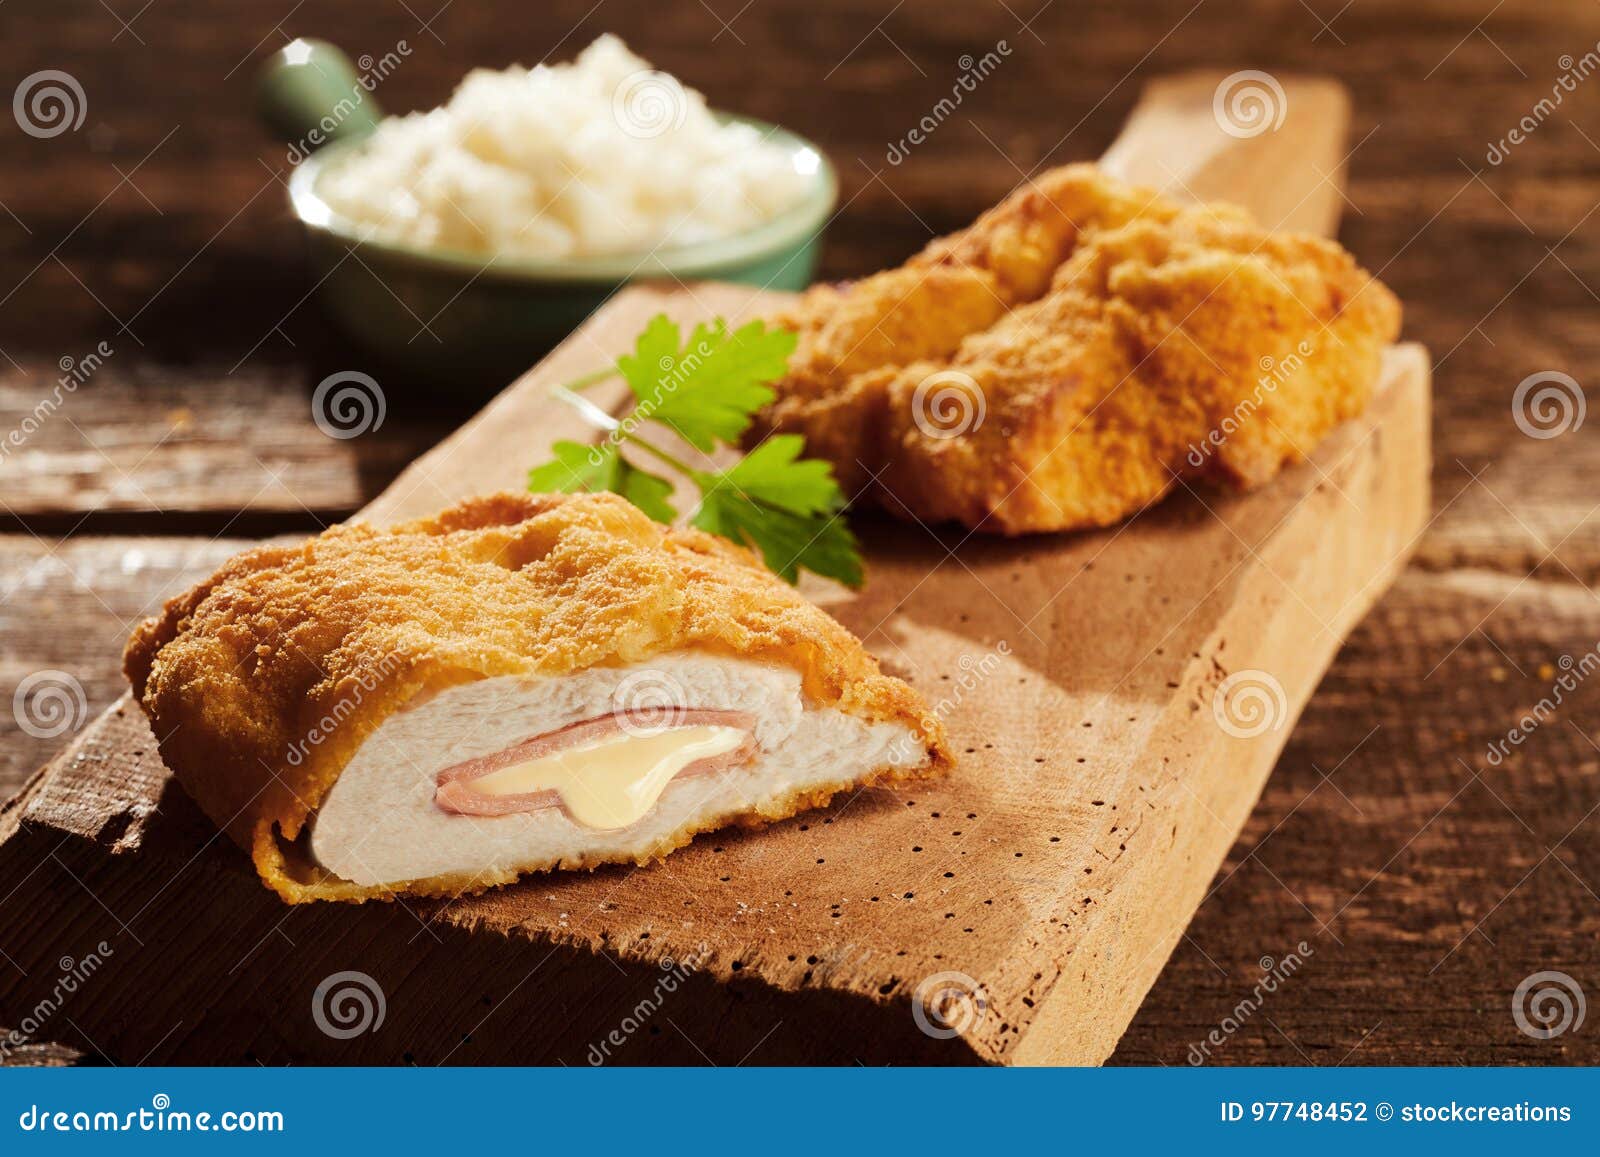 cordon bleu chicken on cutting board